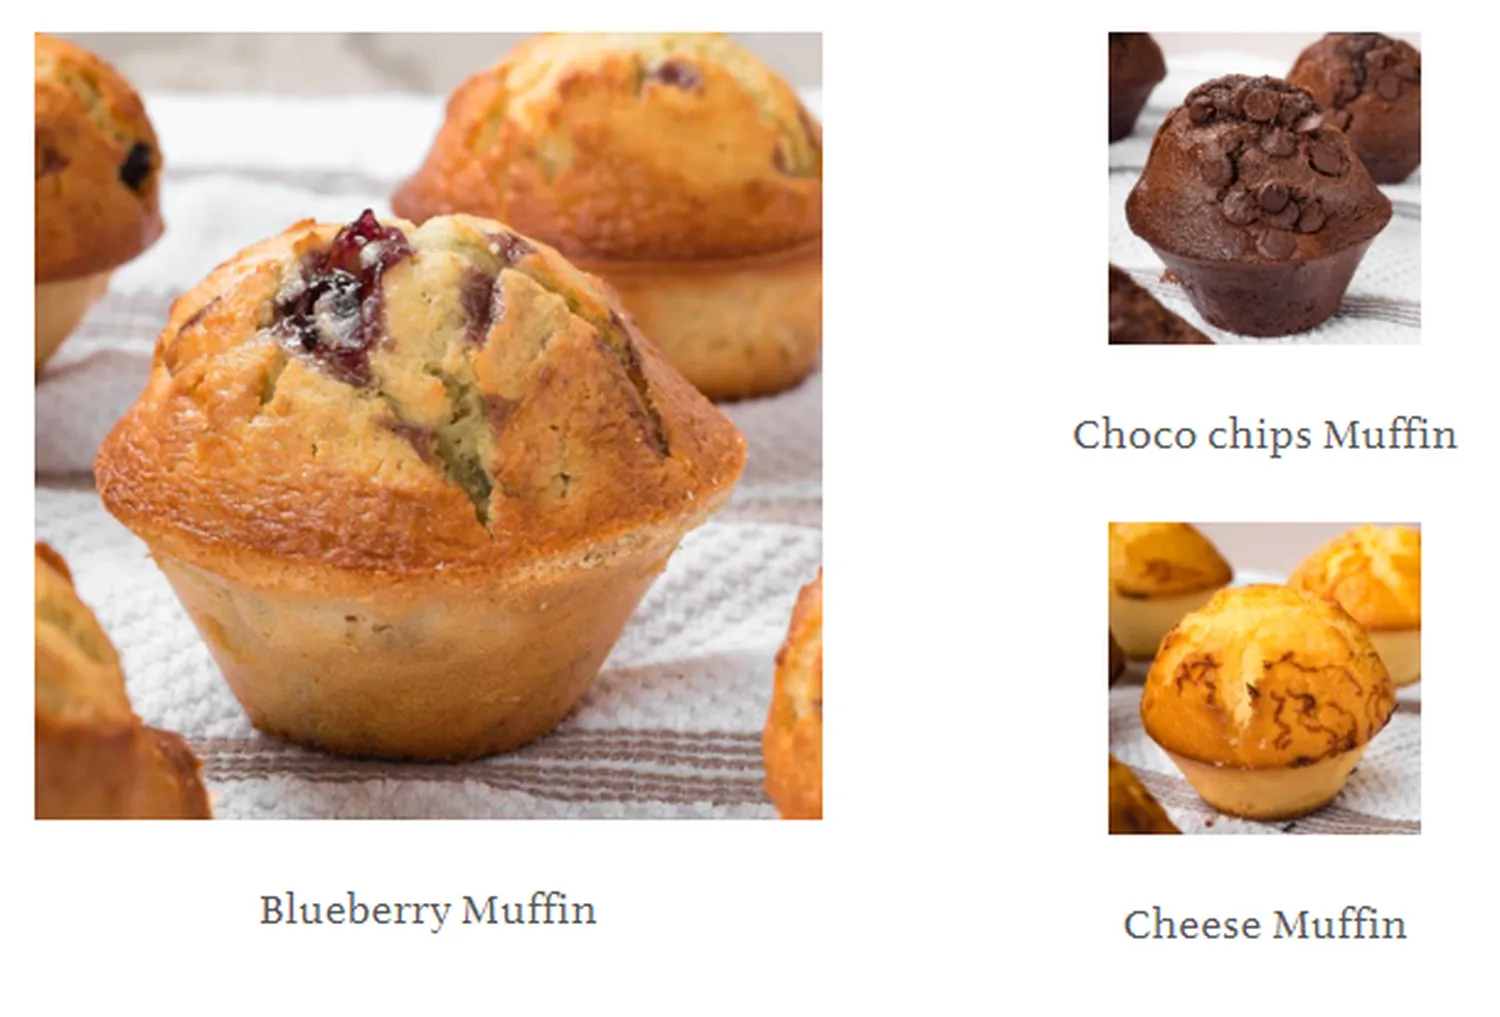 french bakery menu philippine muffins